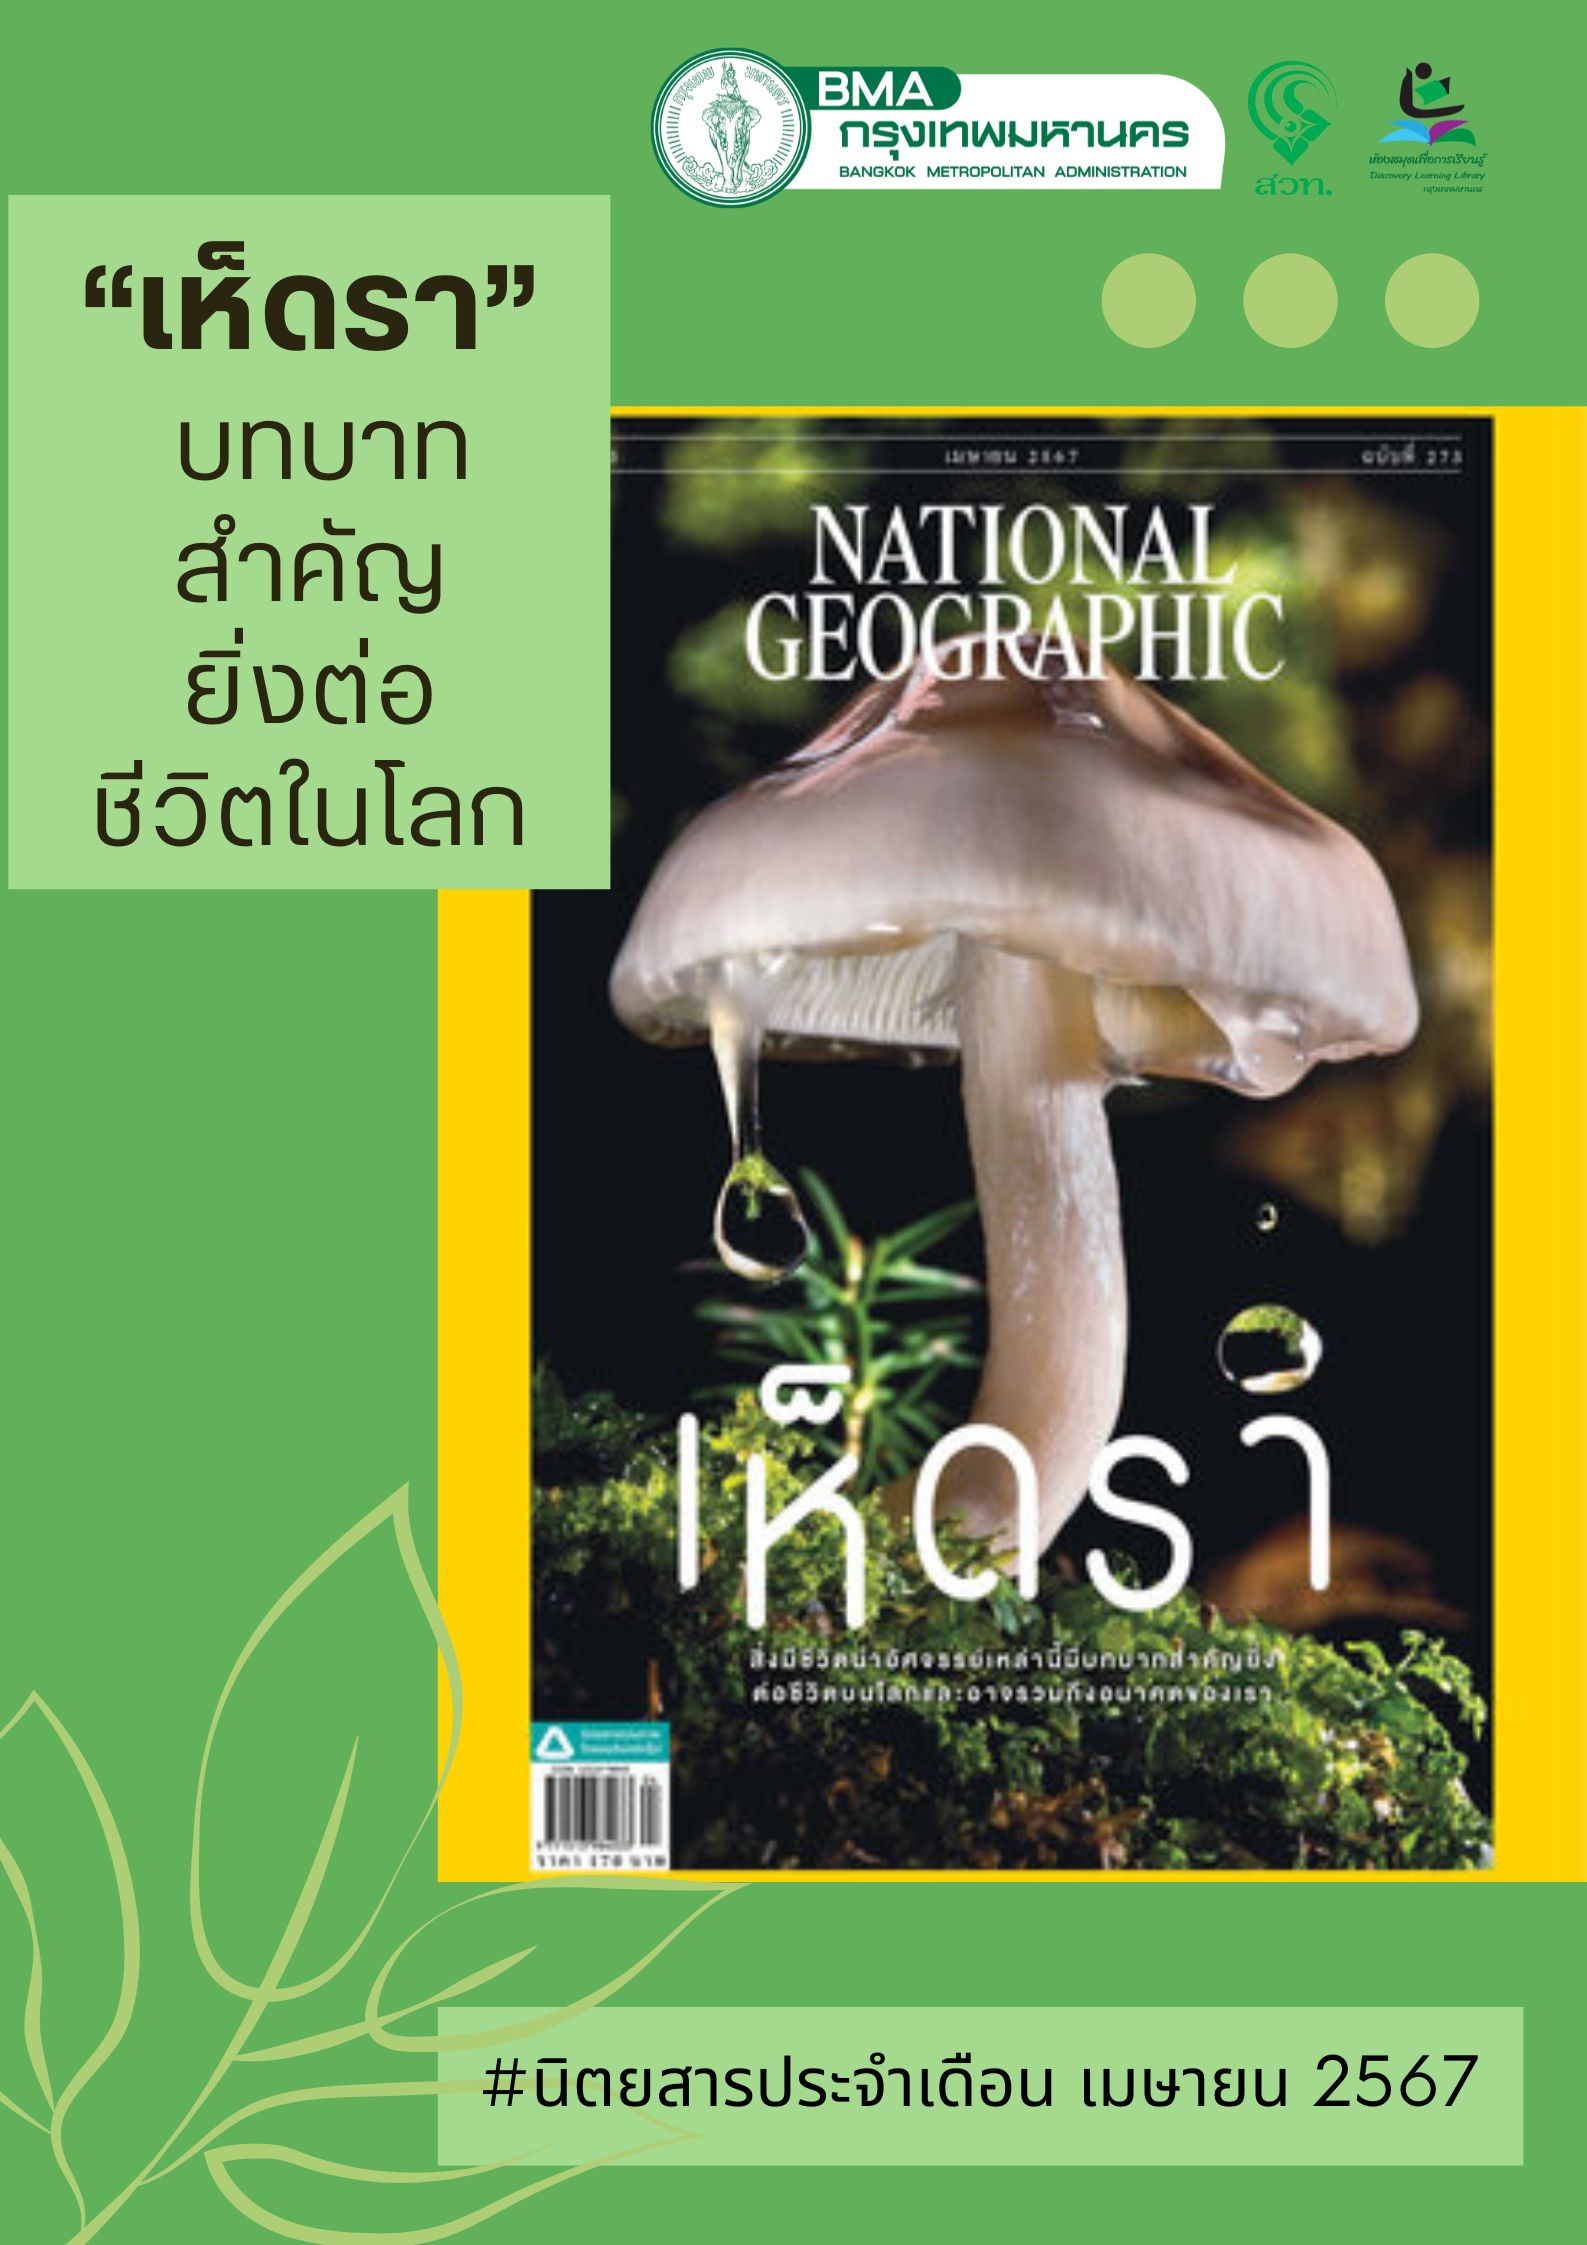 National Geographic ฉบับที่ 273 เมษายน 2567 